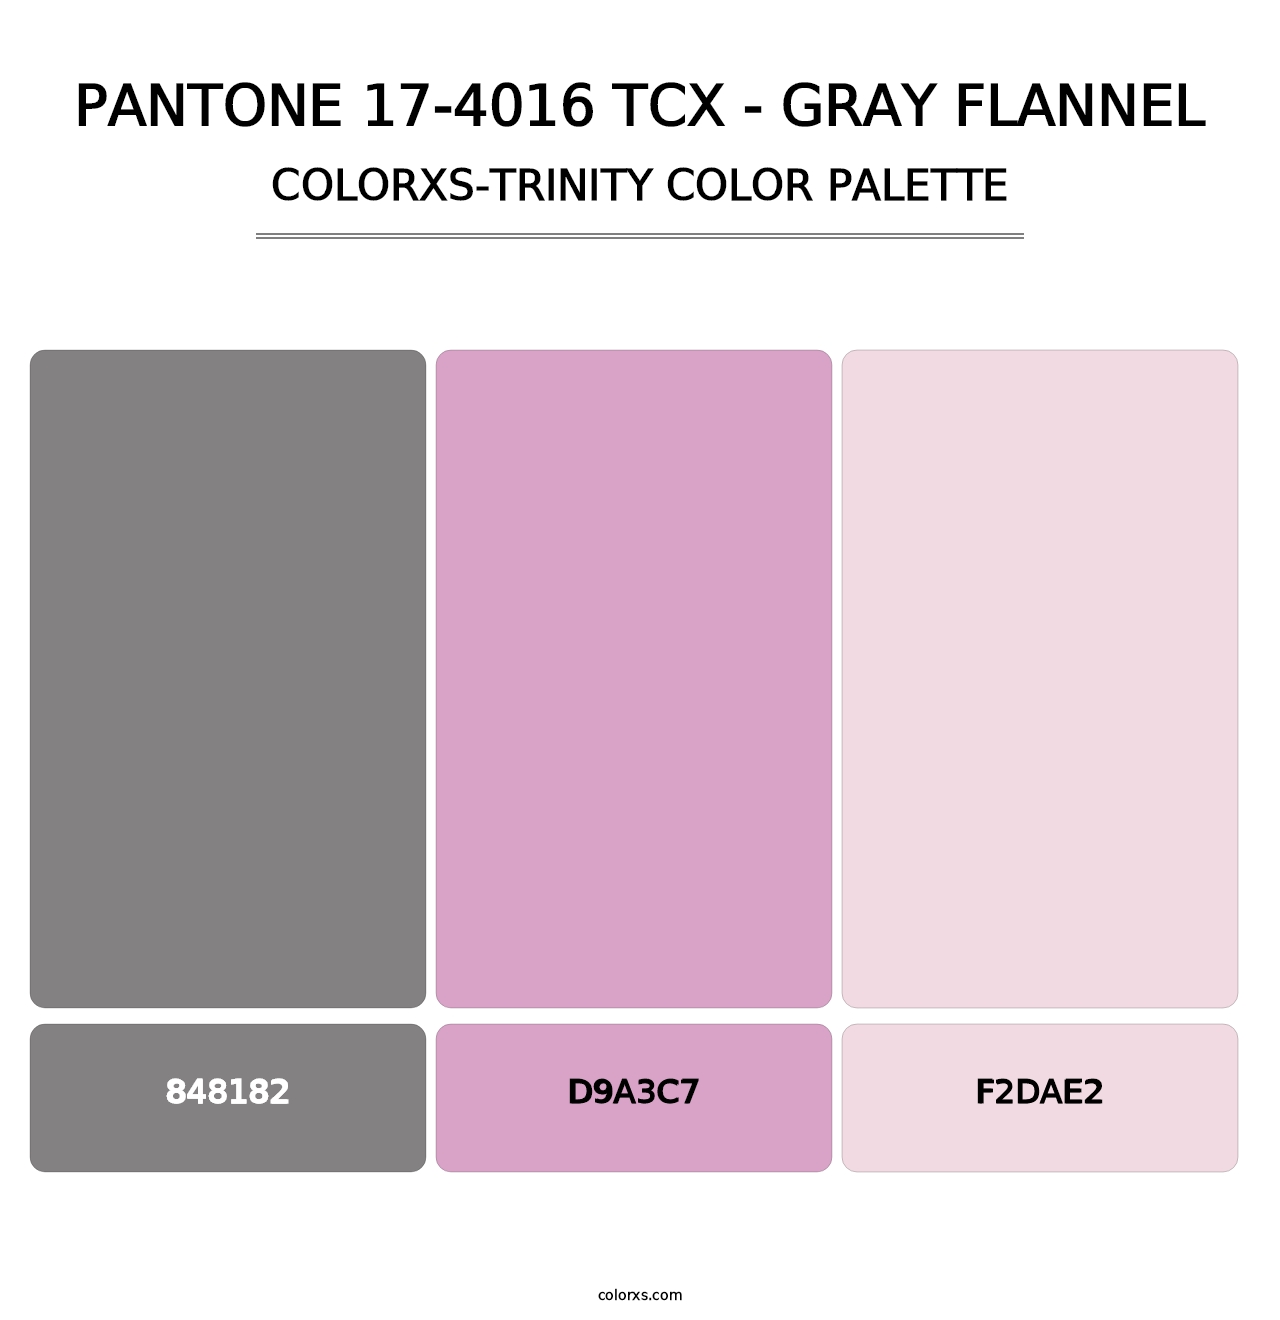 PANTONE 17-4016 TCX - Gray Flannel - Colorxs Trinity Palette